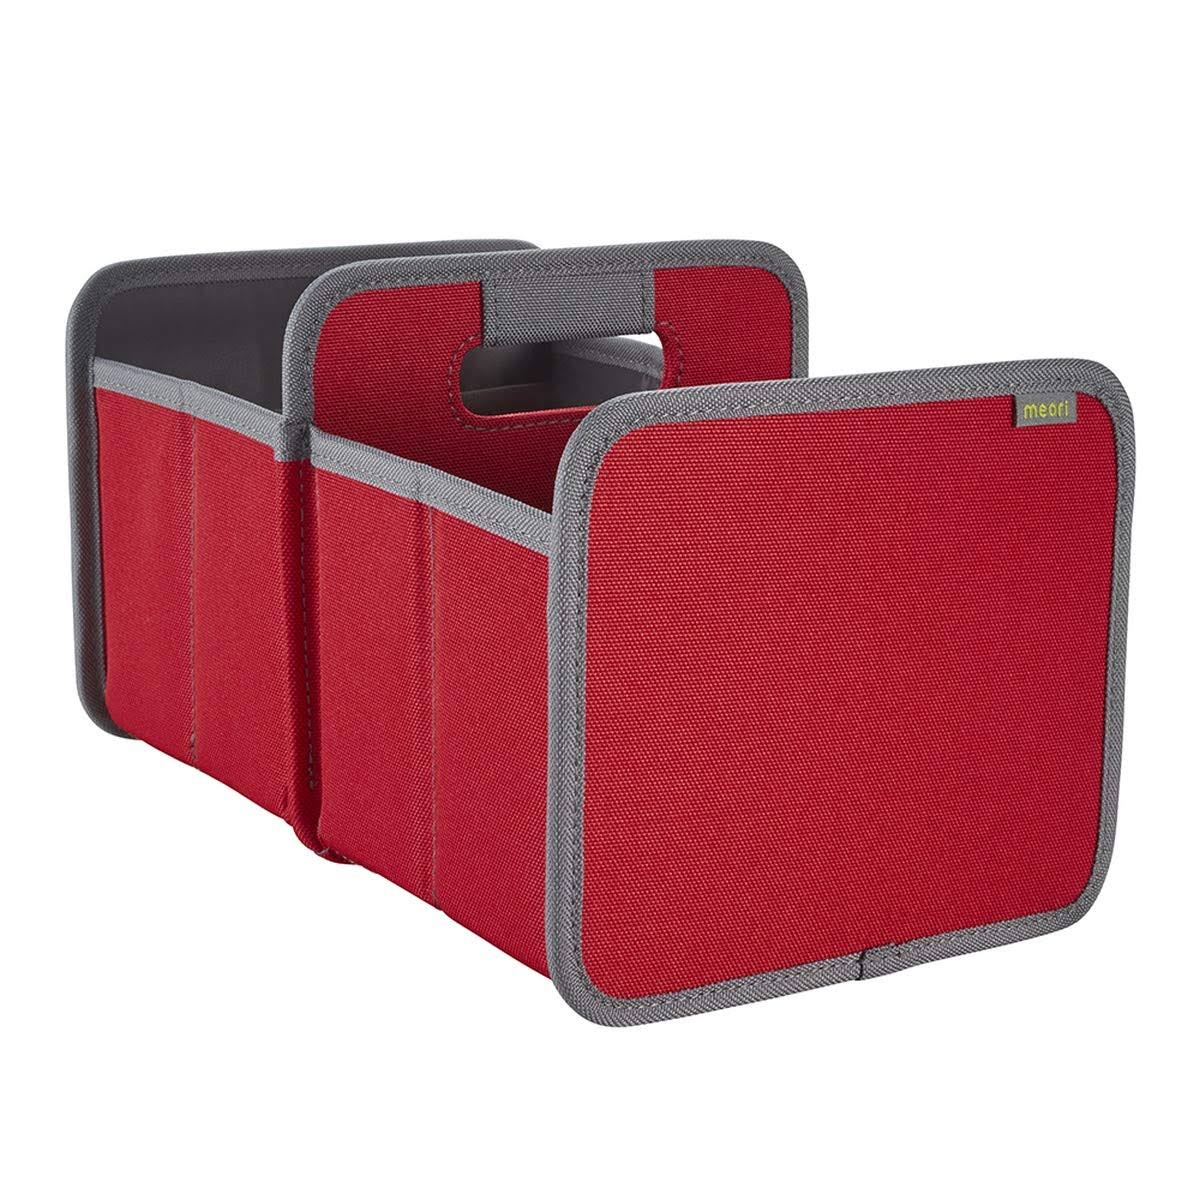 Meori Foldable Double Mini Box | Hibiscus Red Double